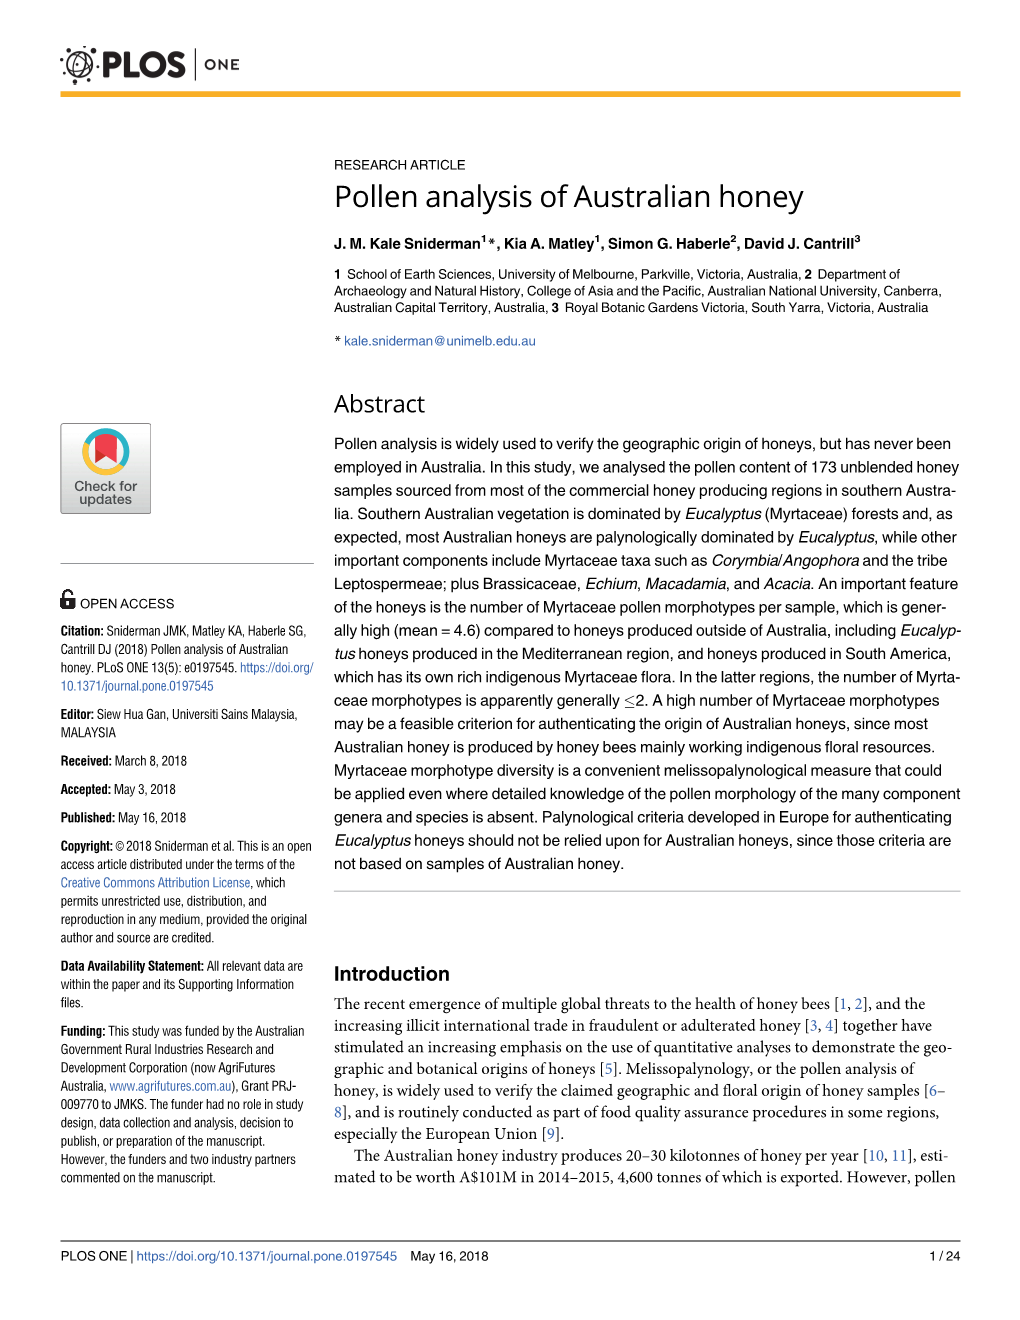 Pollen Analysis of Australian Honey